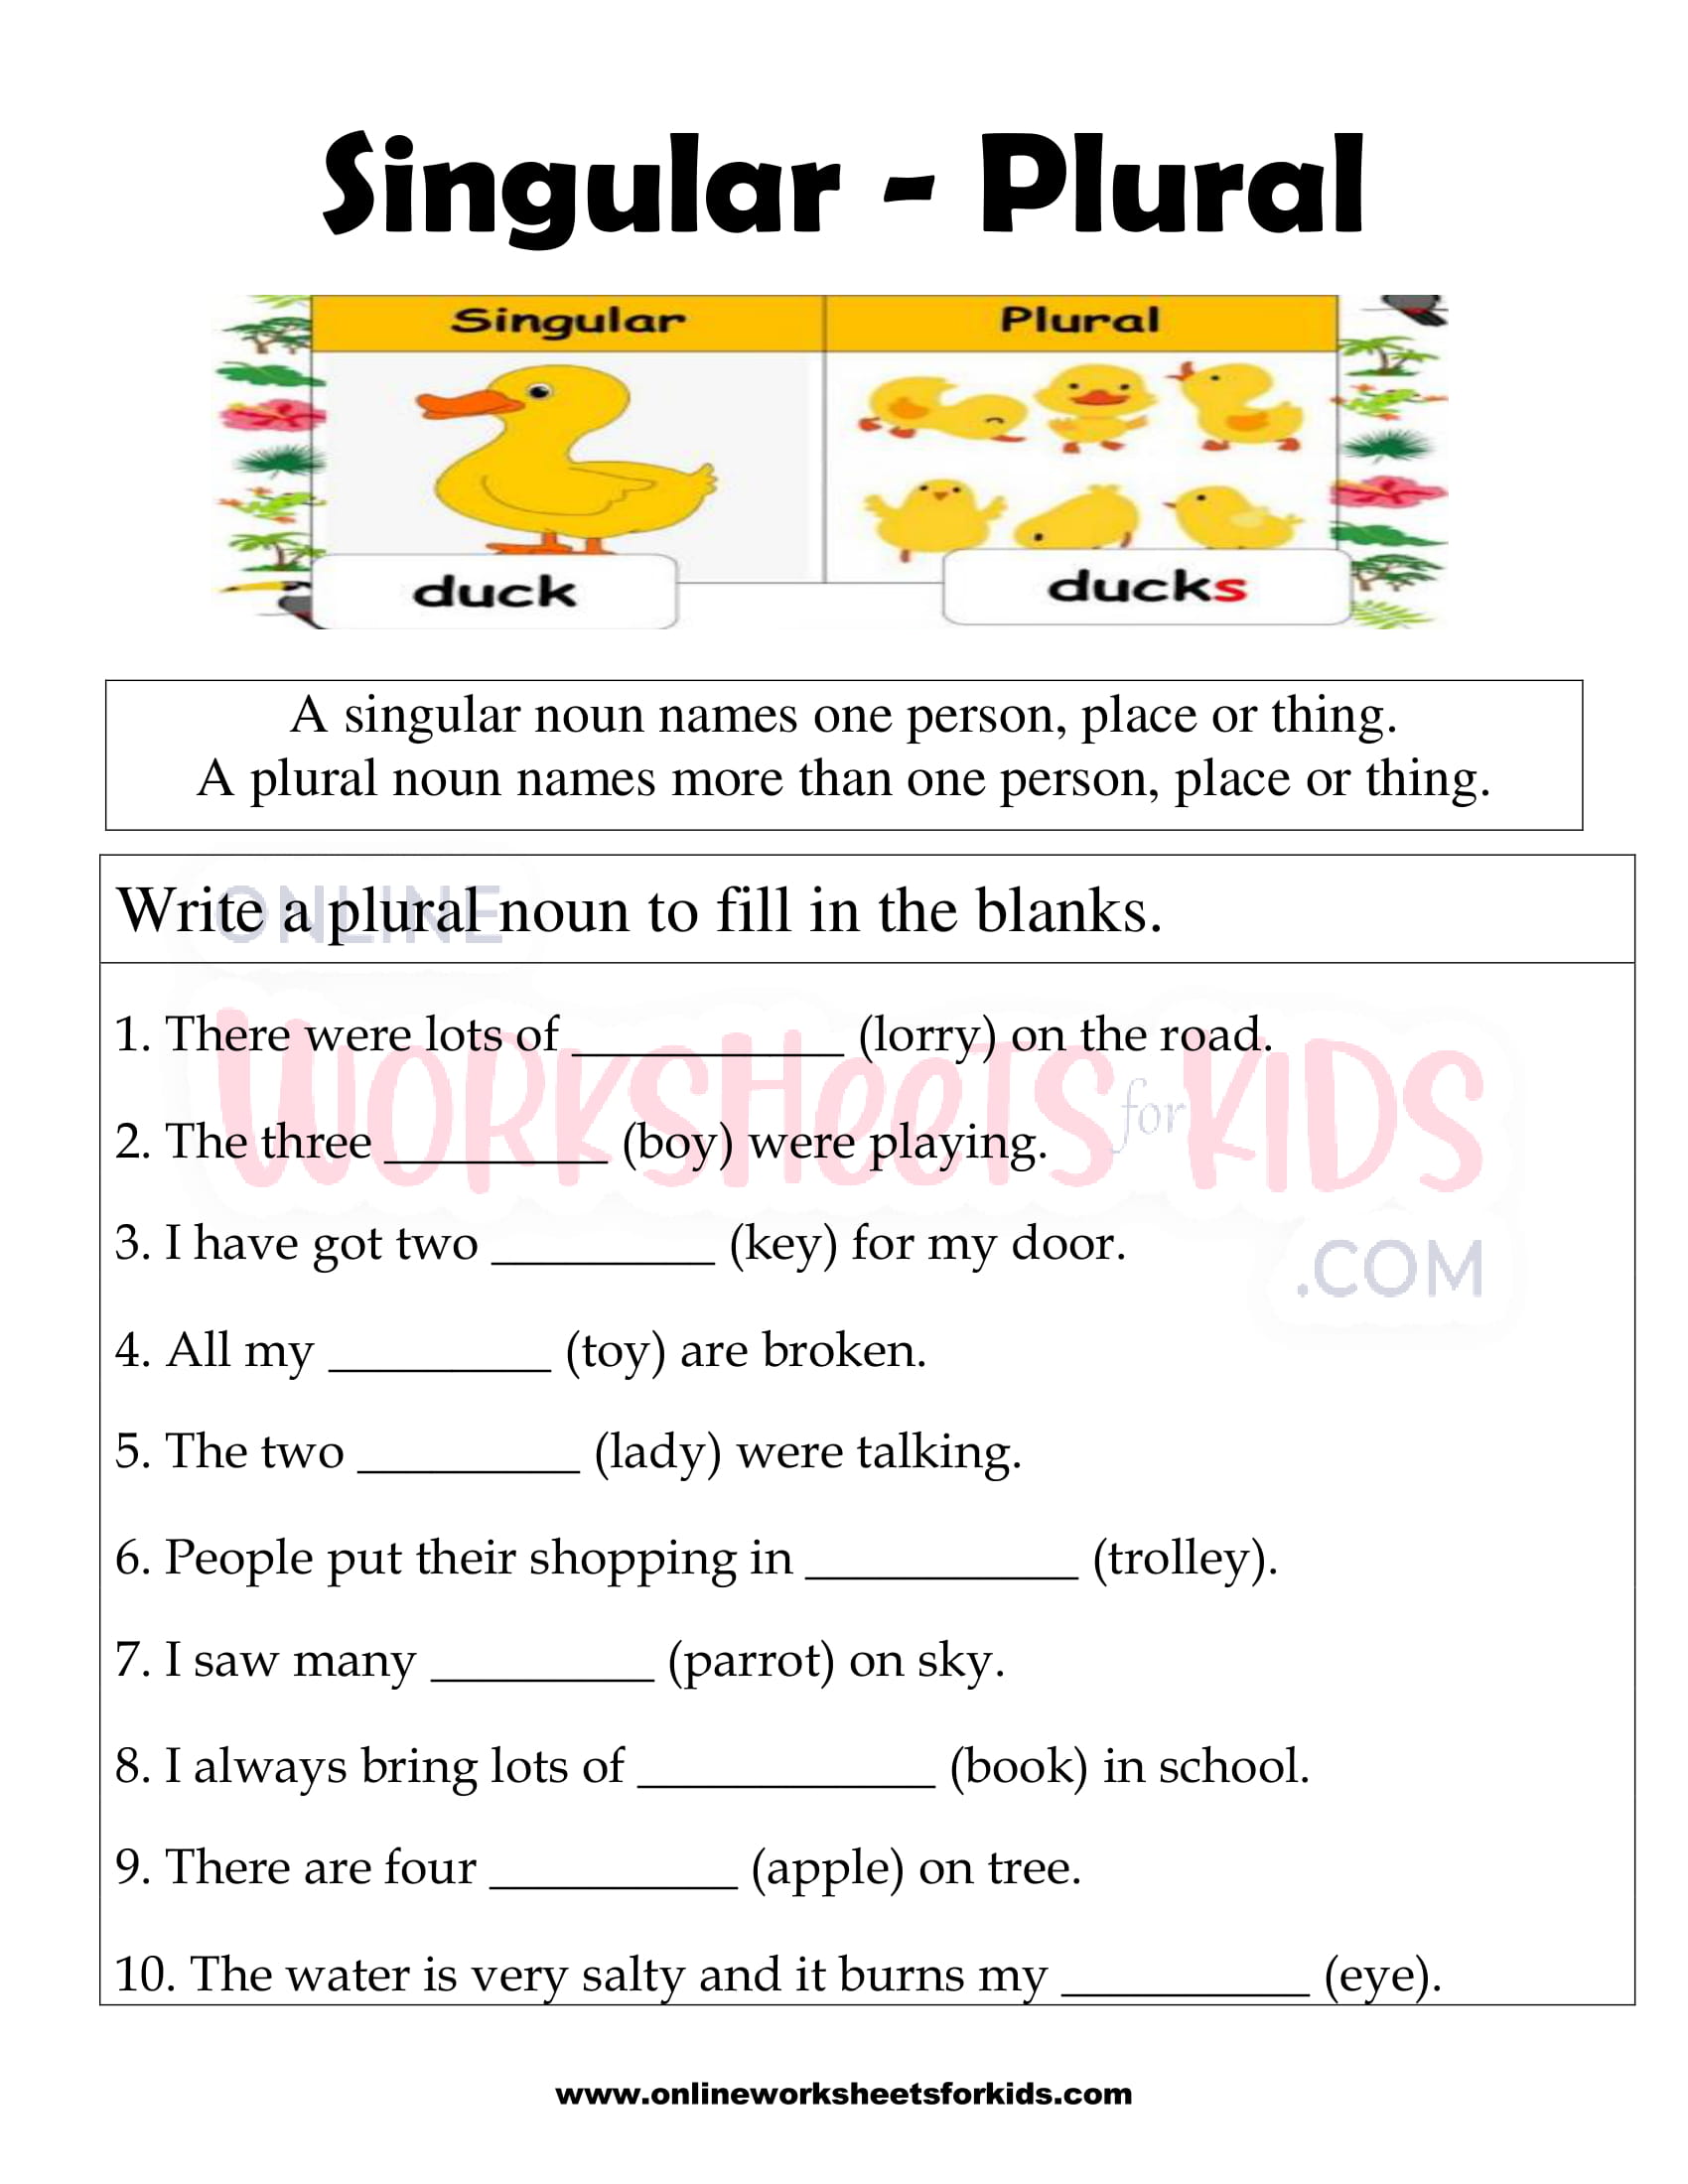 irregular-nouns-worksheets-irregular-plural-nouns-worksheets-nouns